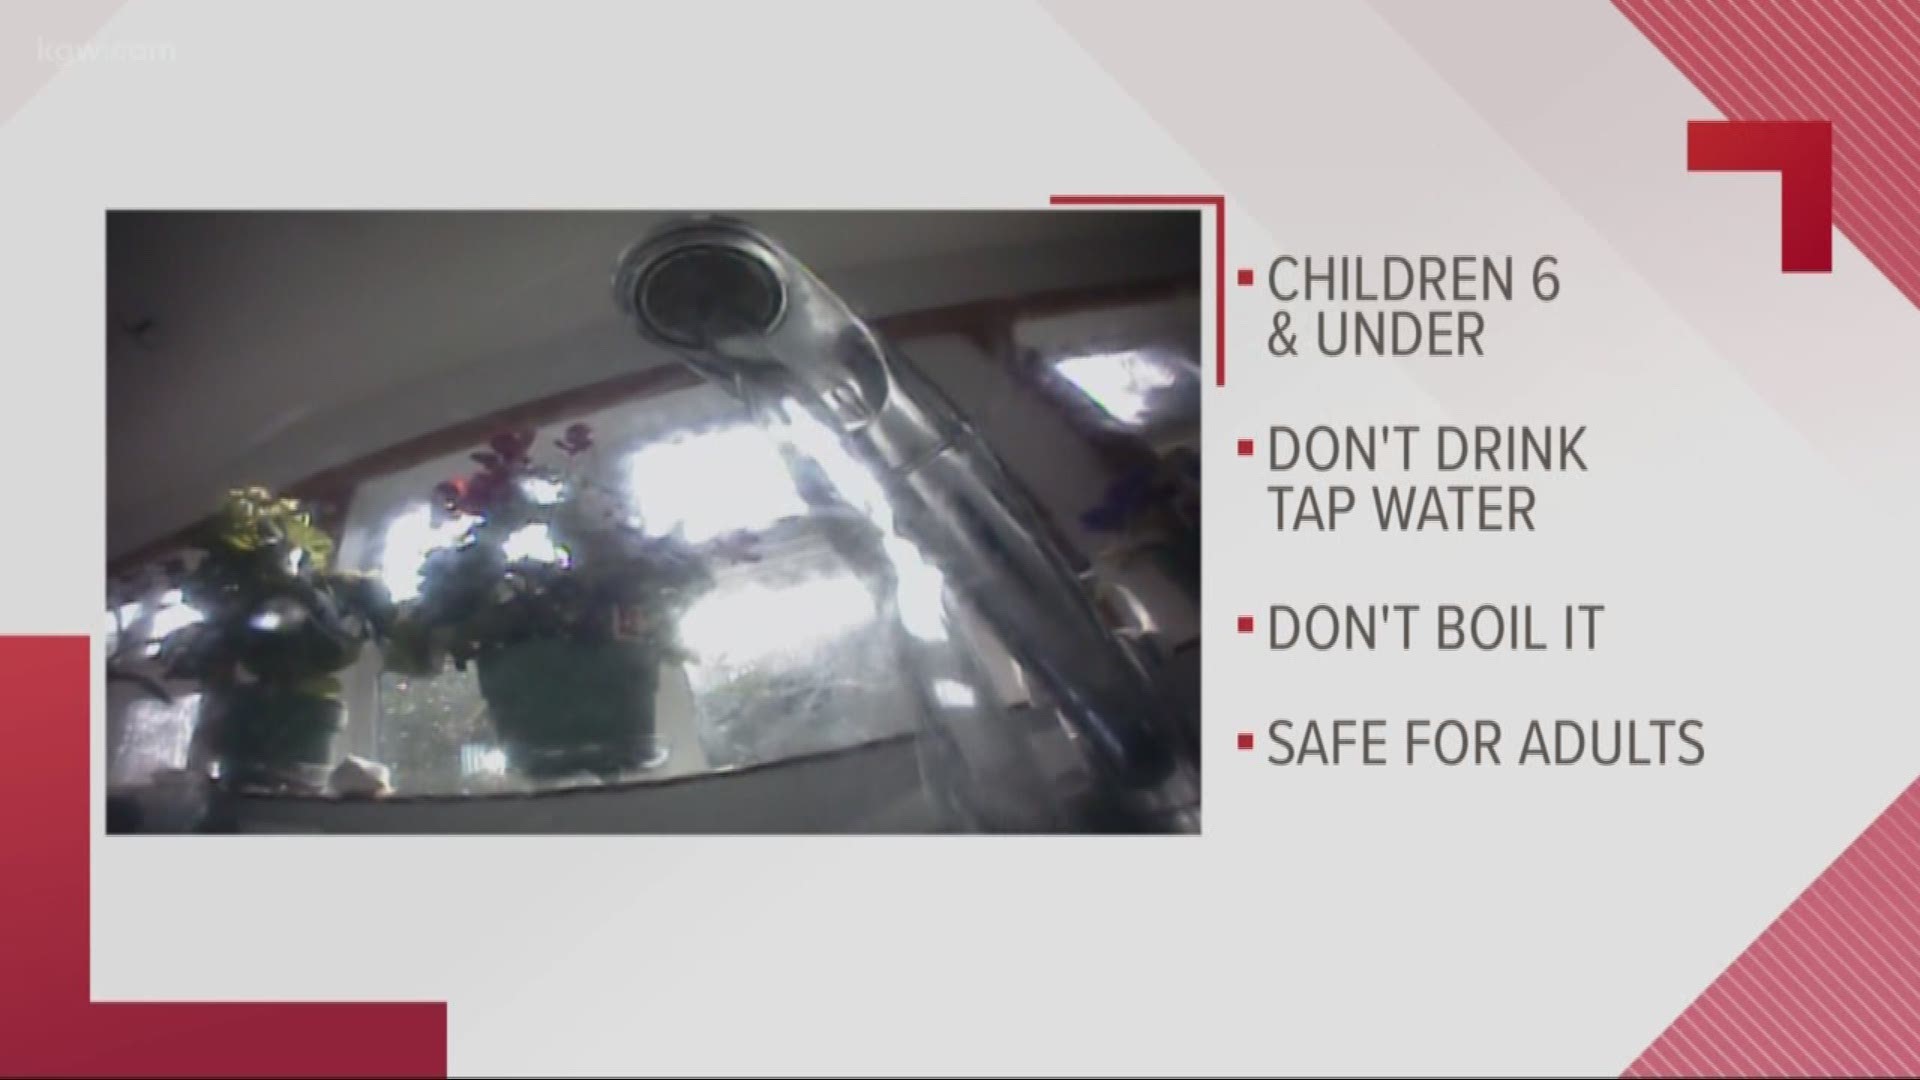 Warning: Children should not drink tap water in Salem